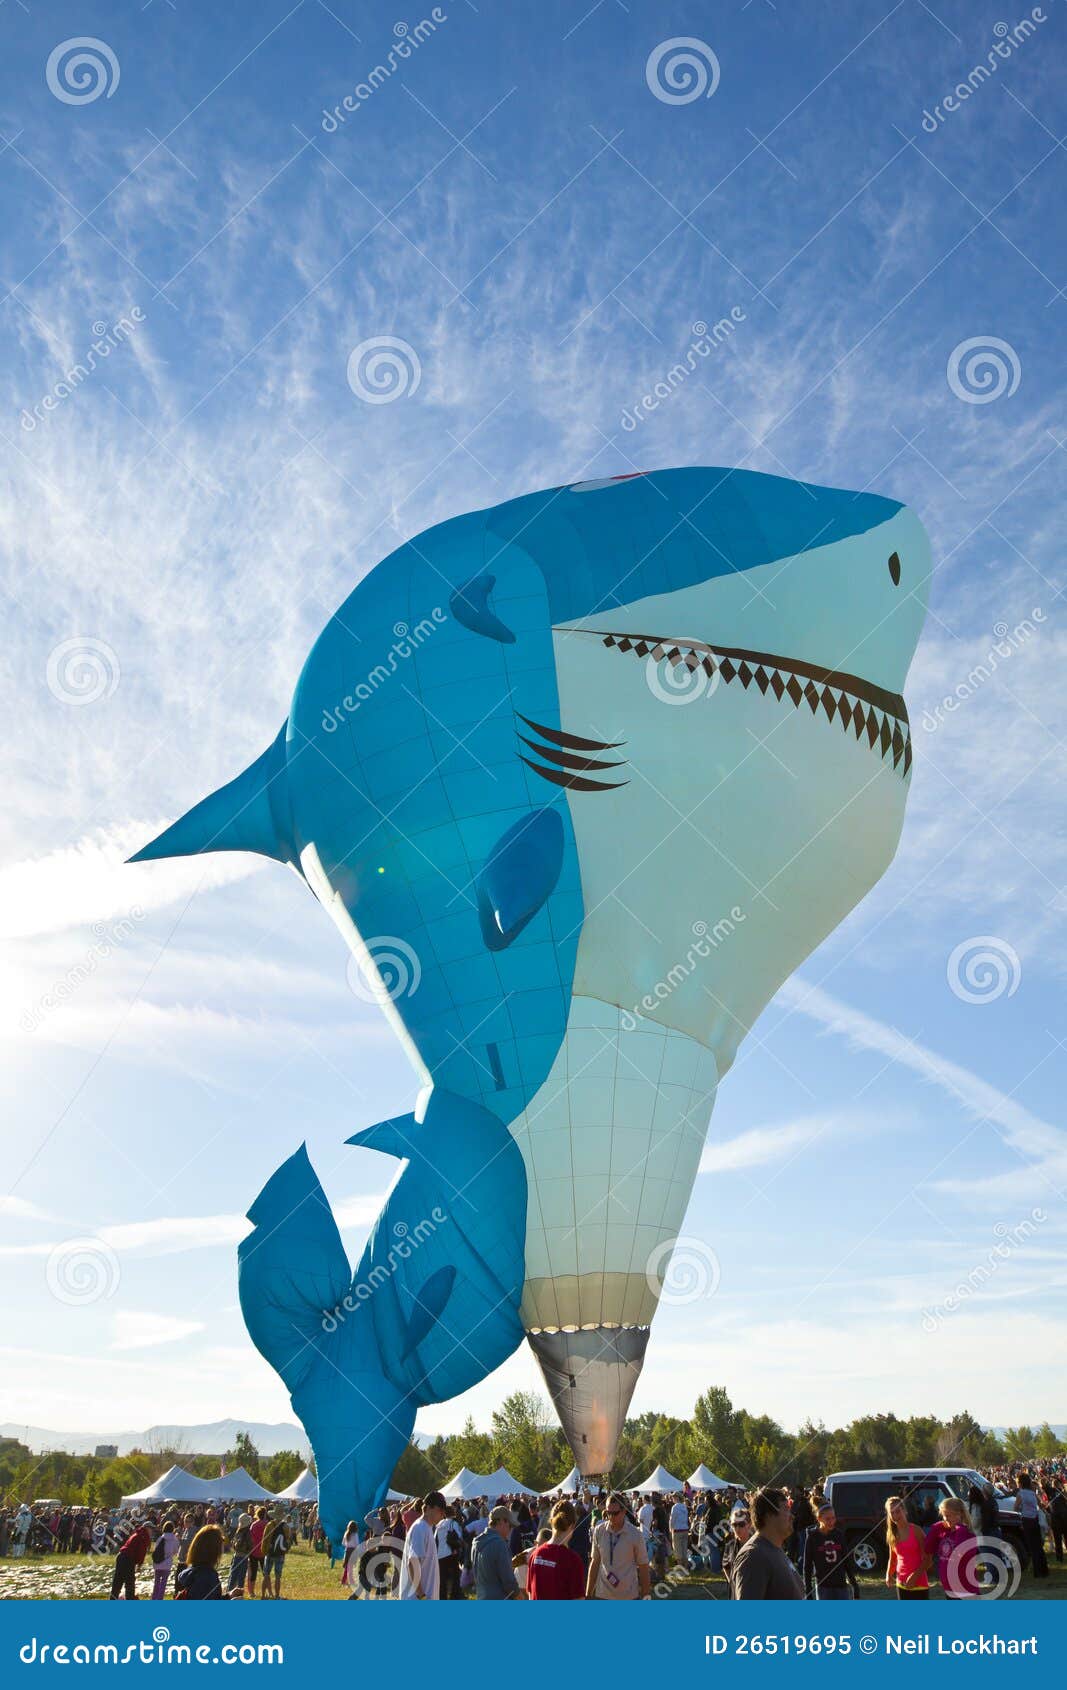 118 Shark Balloon Stock Photos - Free & Royalty-Free Stock Photos from  Dreamstime